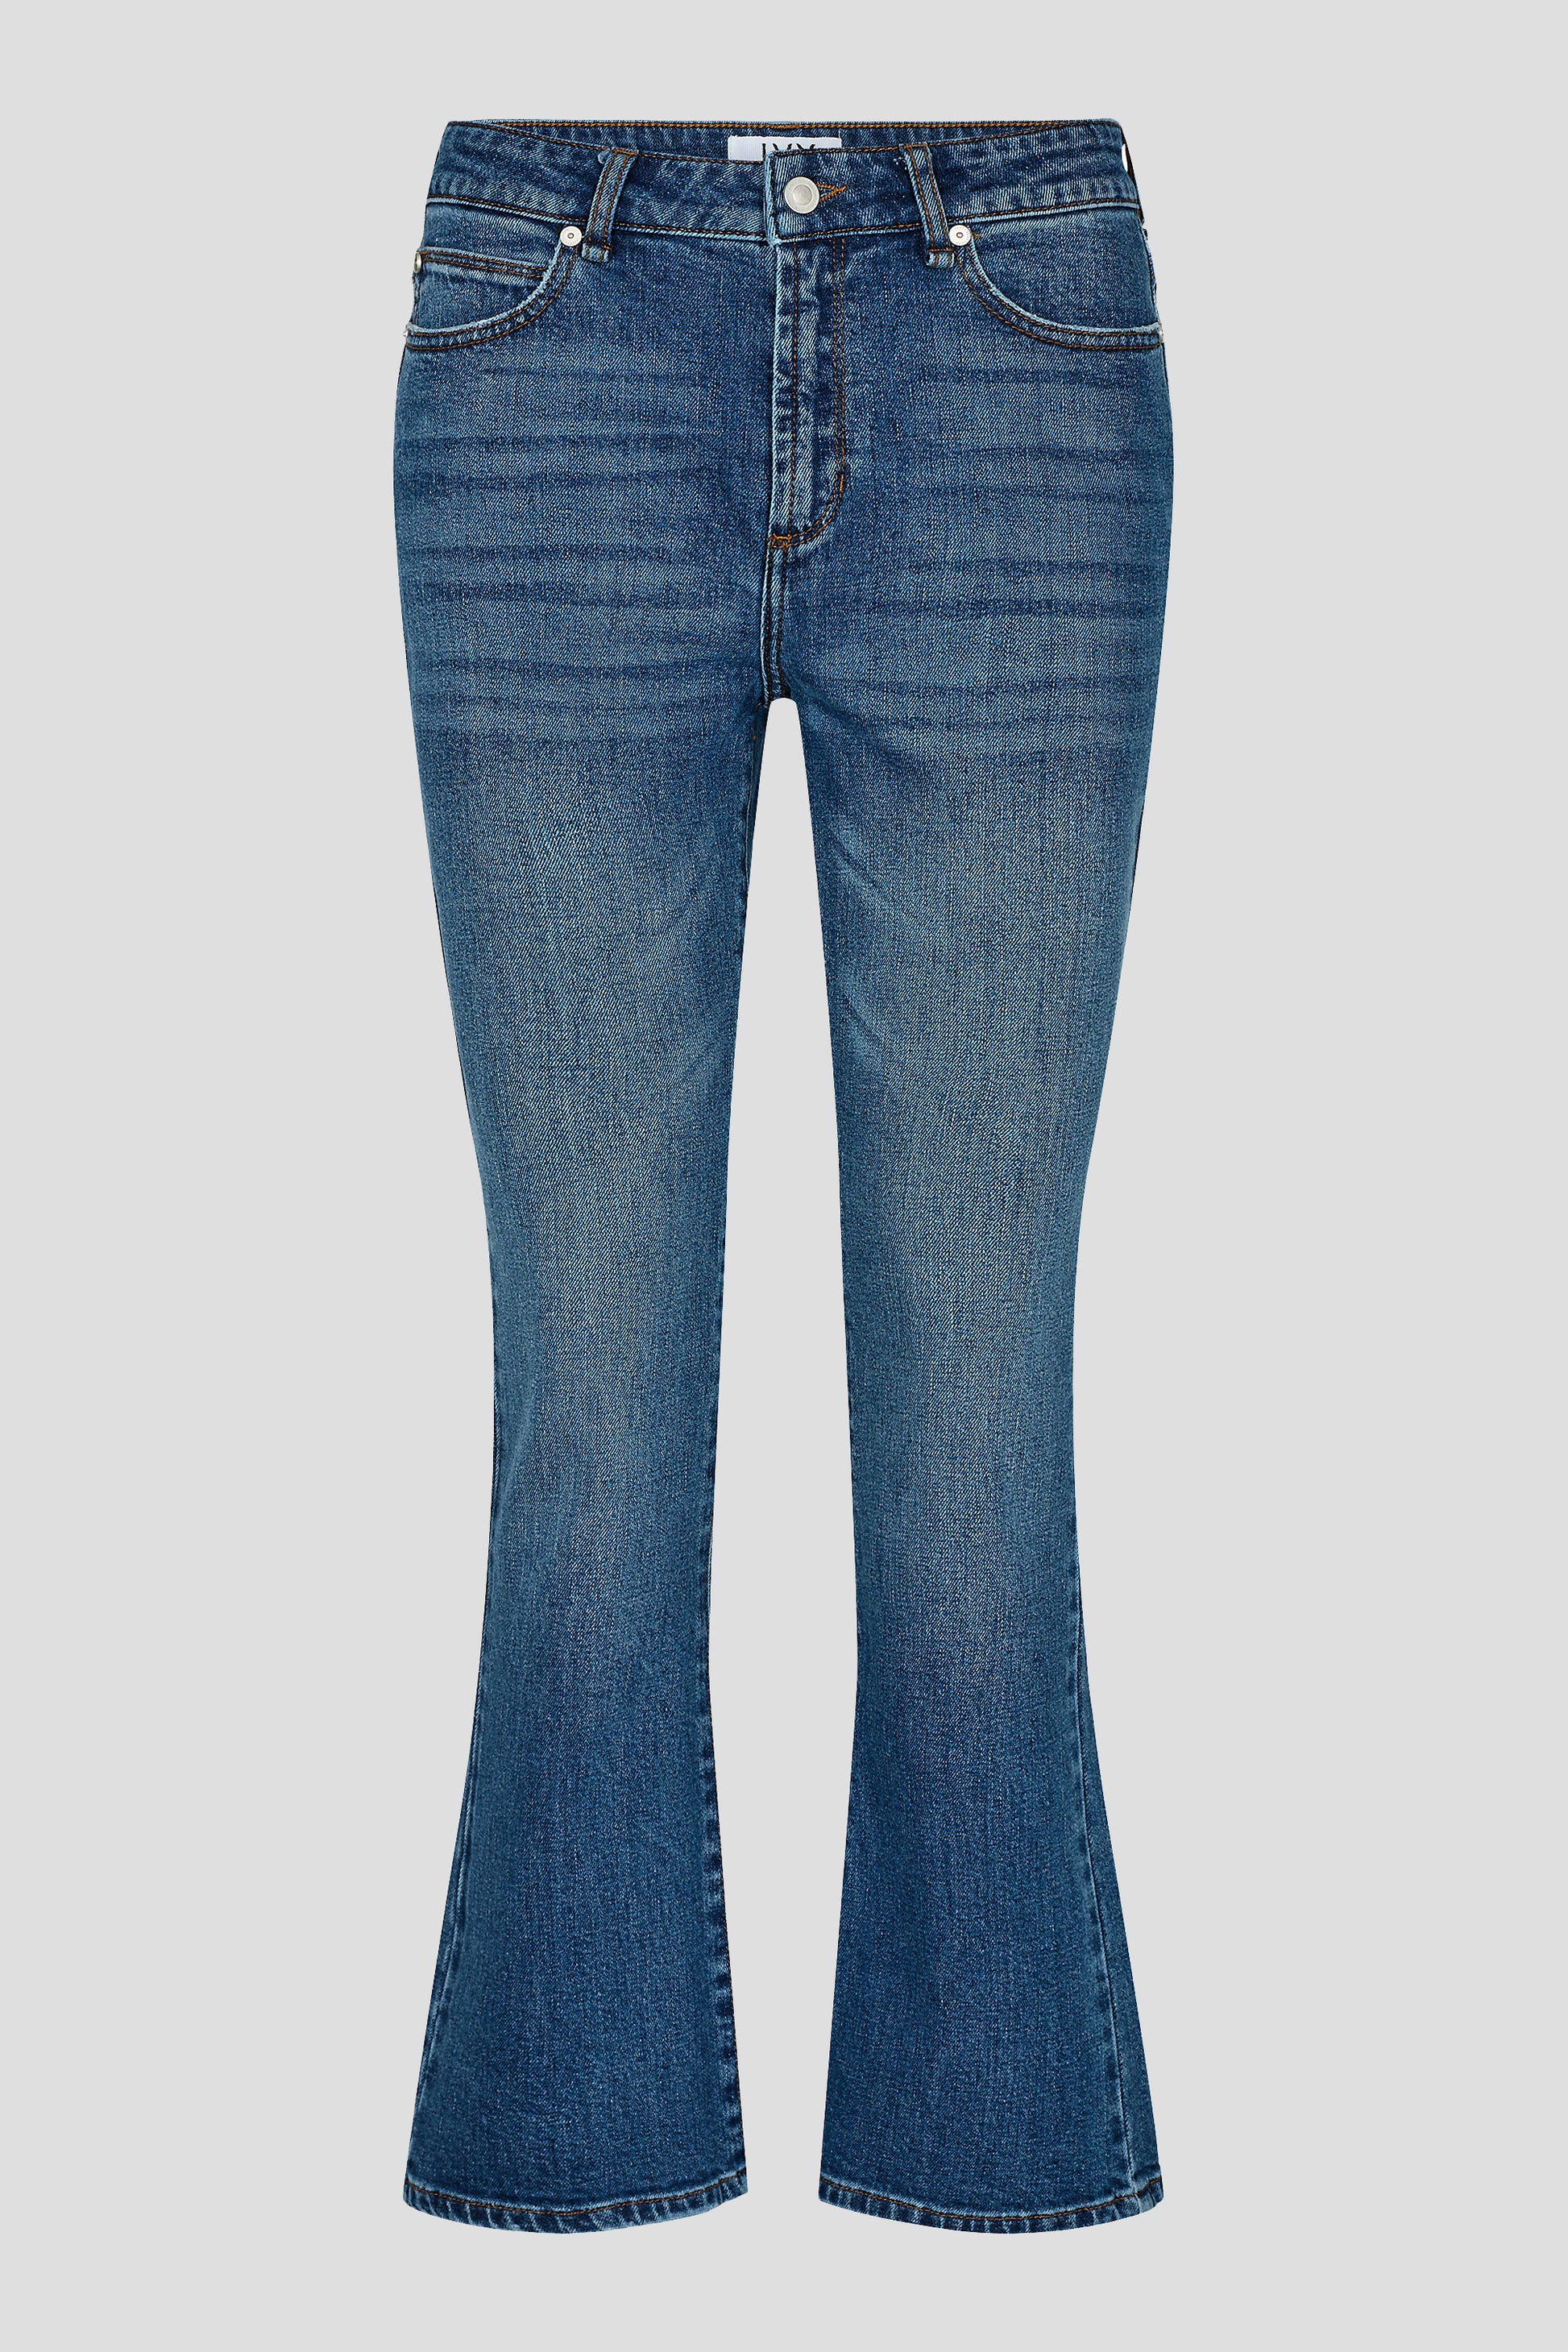 IVY Copenhagen IVY-Johanna Kick Flare Wash Vintage Indigo Jeans & Pants 51 Denim Blue